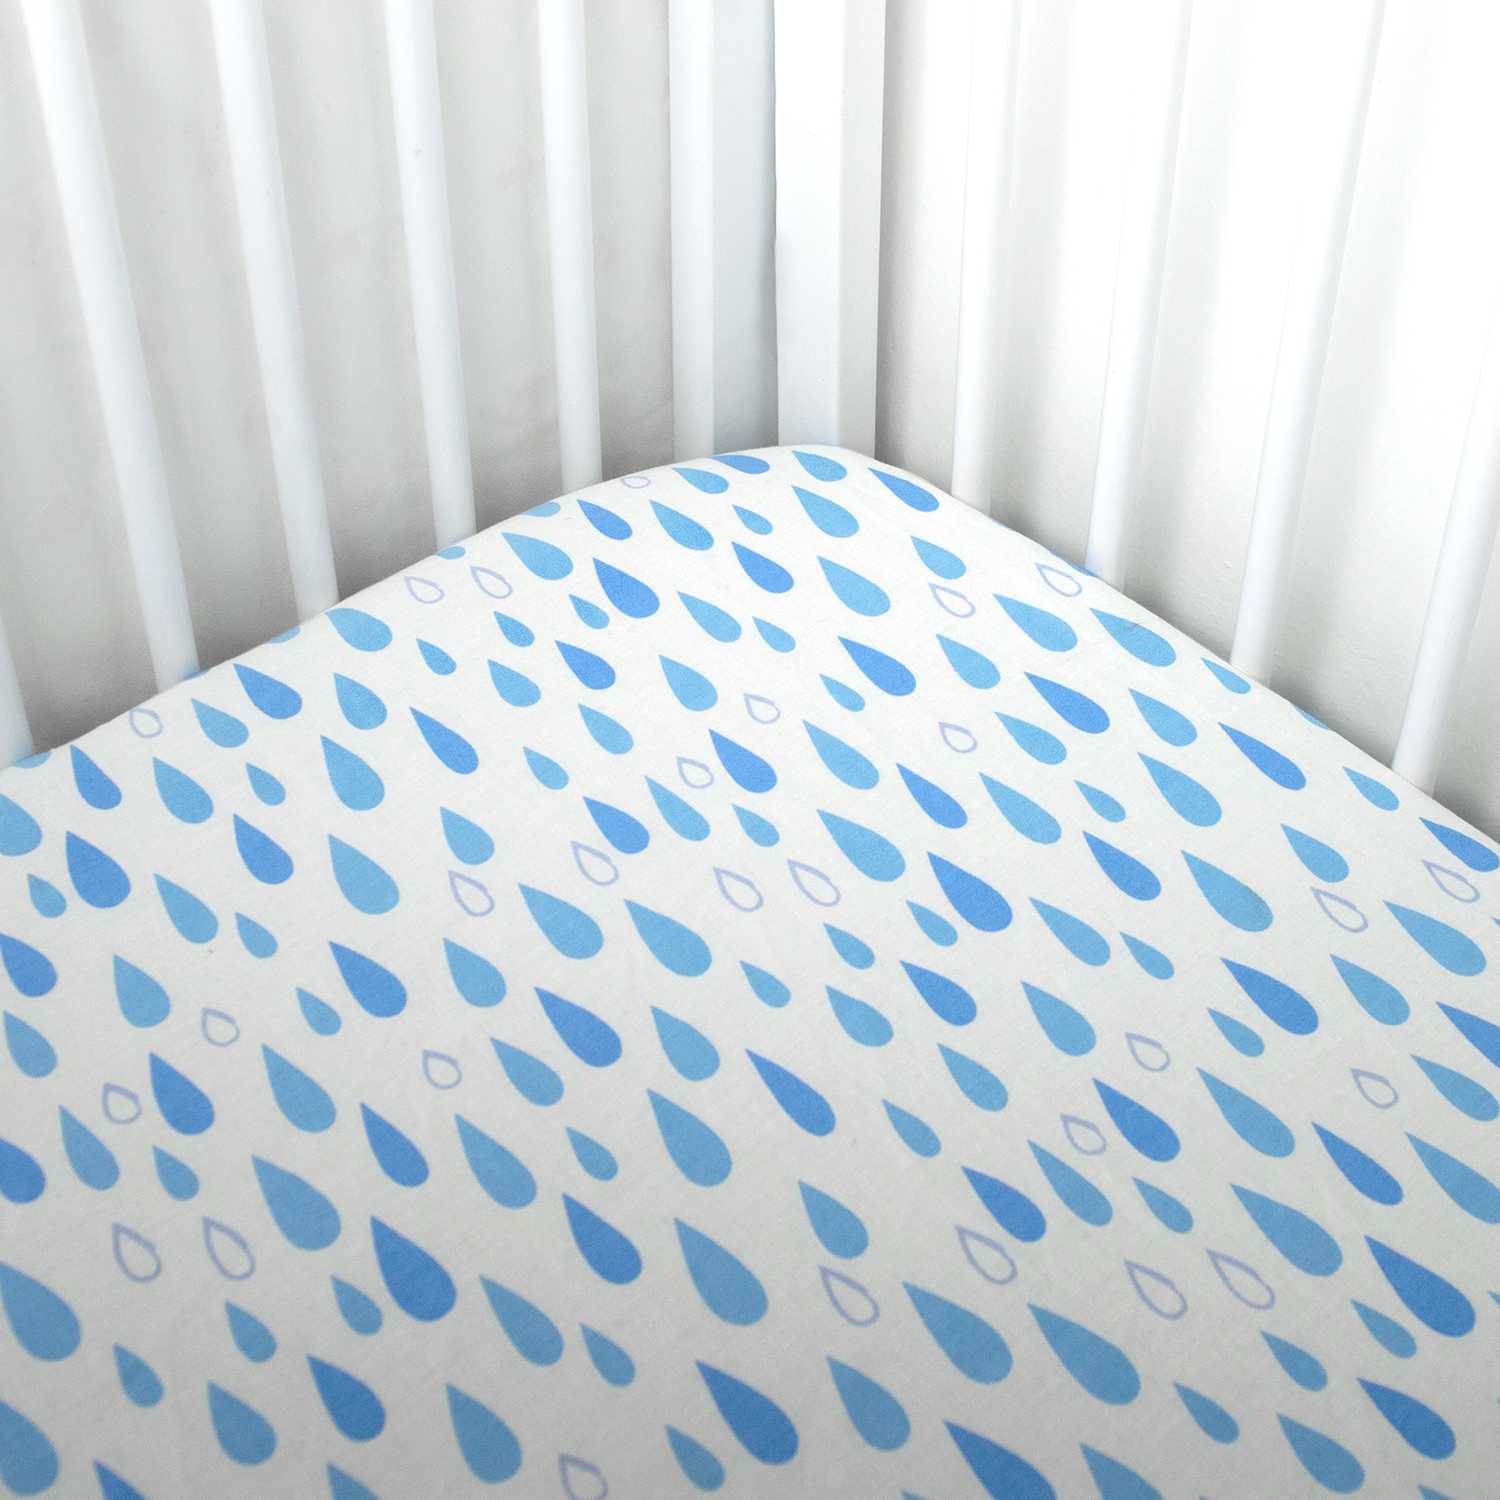 Tidy Sleep Organic Fitted Cot Sheet - Rain Drops Blue